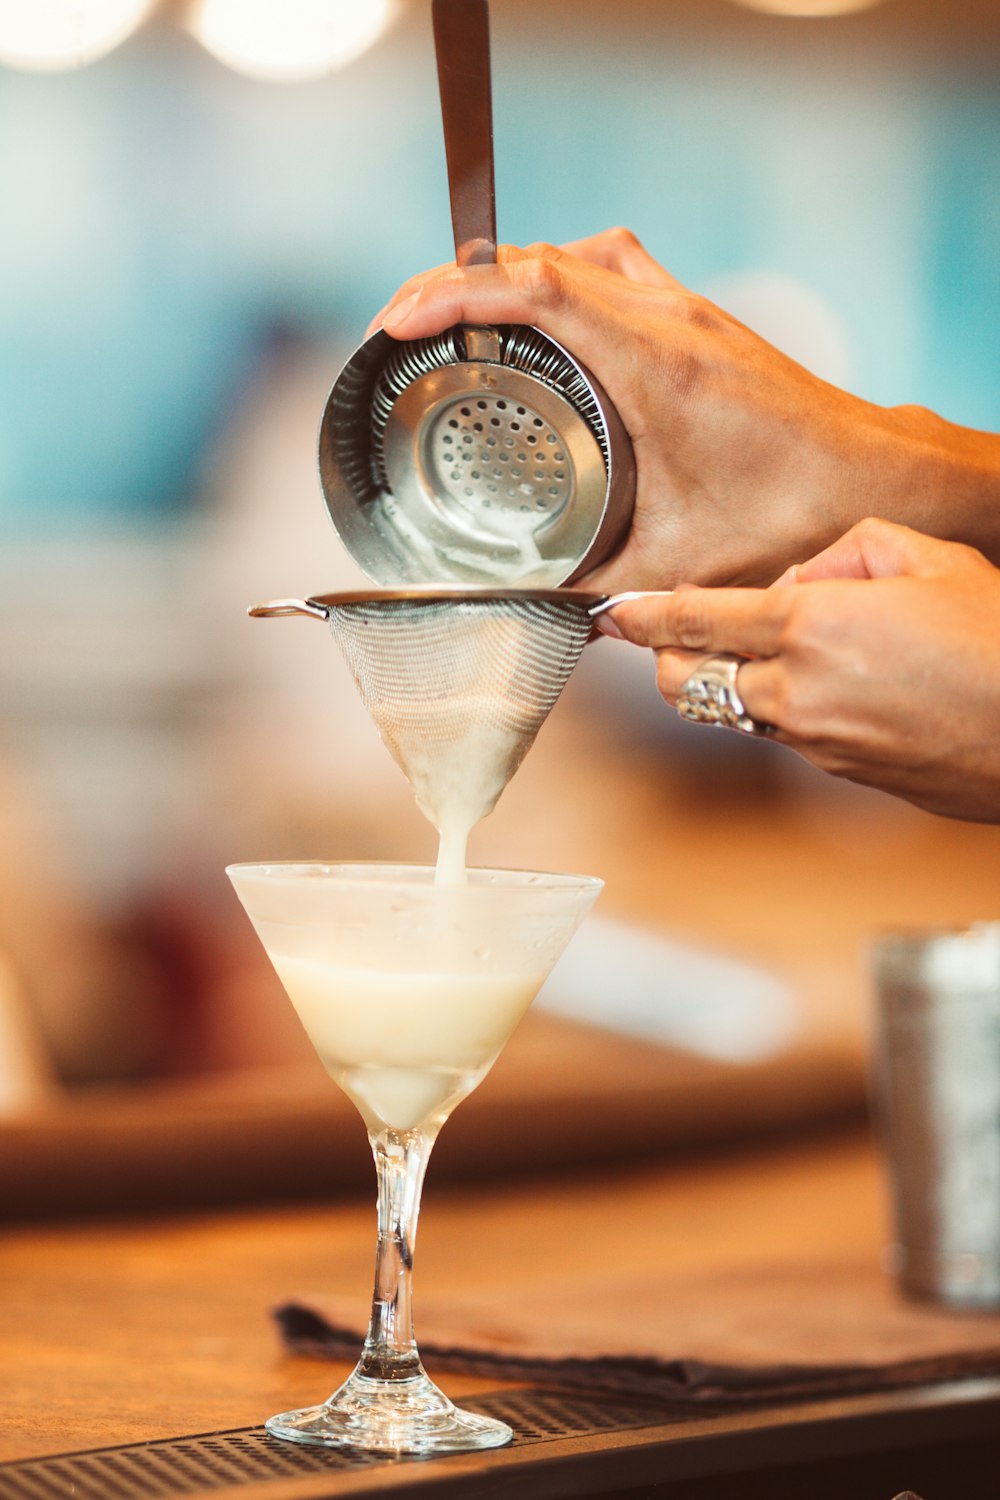 pessoa segurando recipiente derramando líquido branco no vidro martini